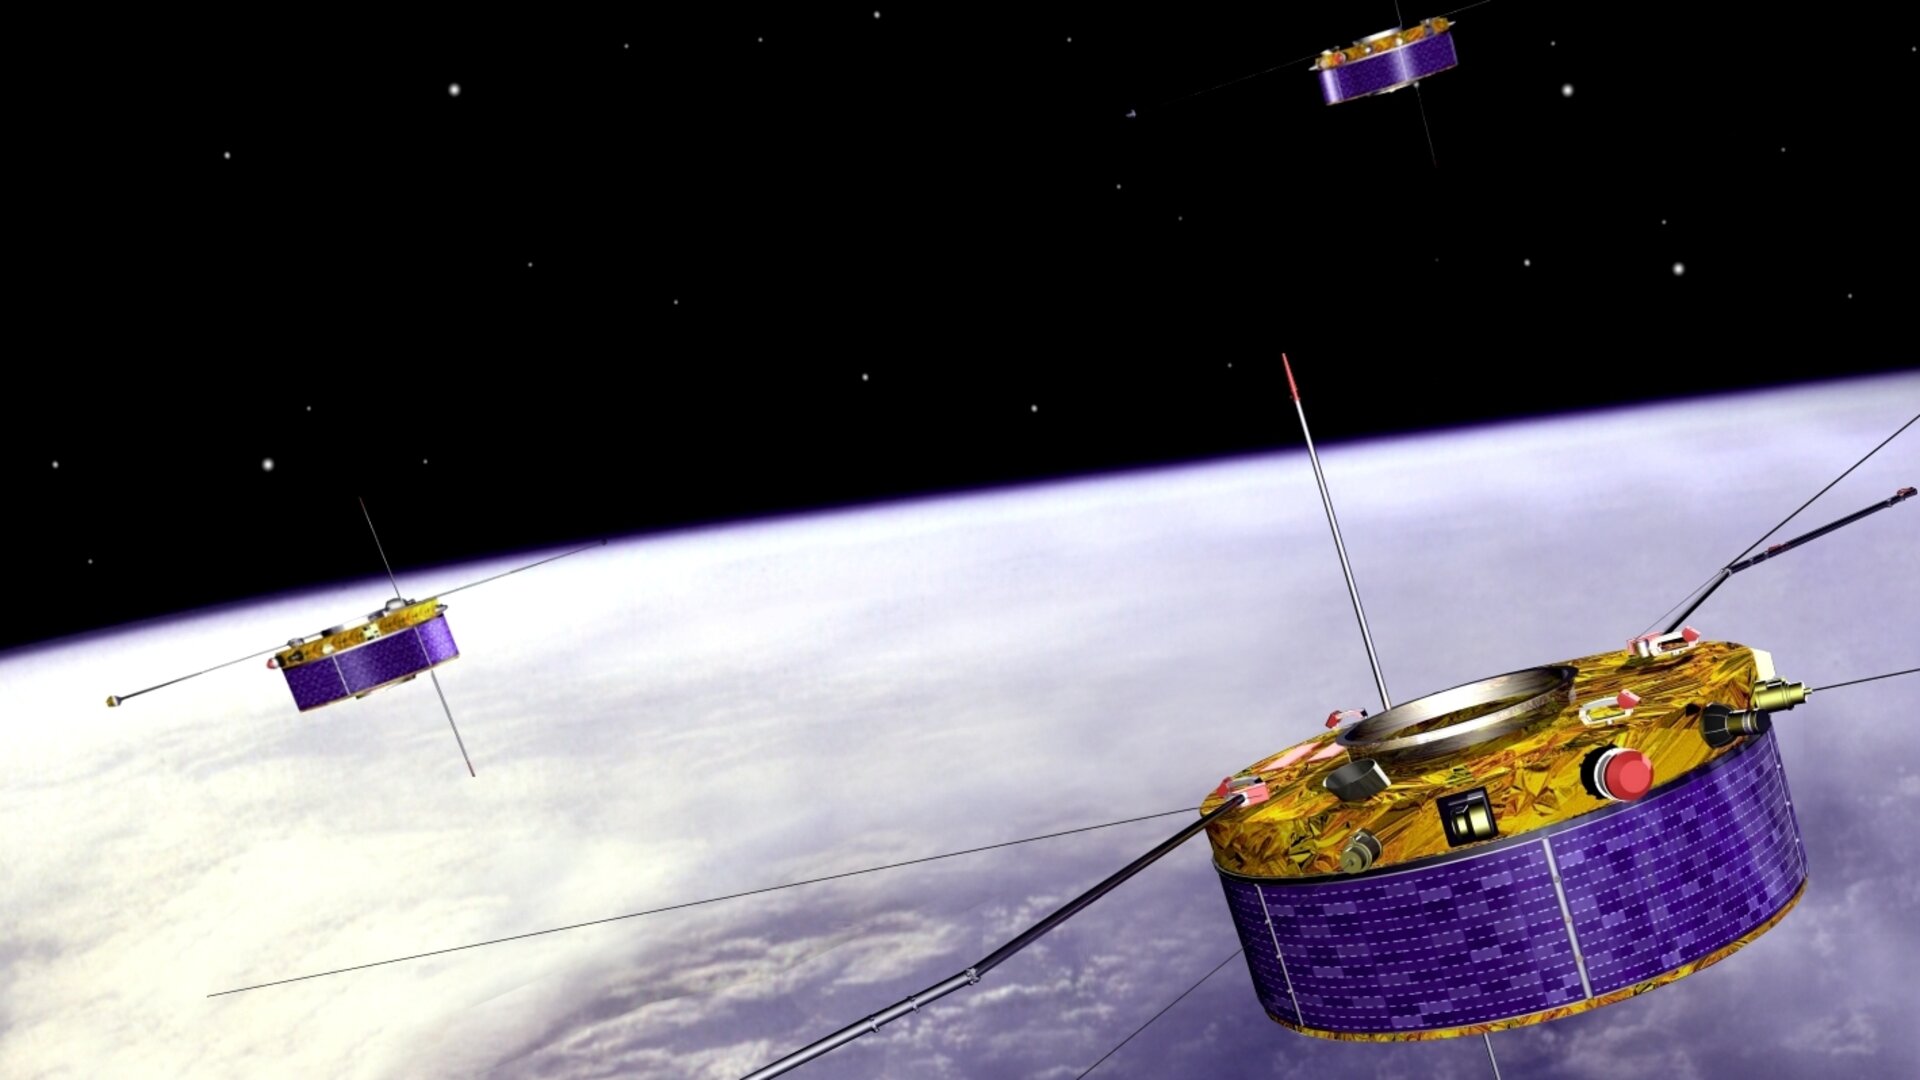 4-satellite Cluster mission